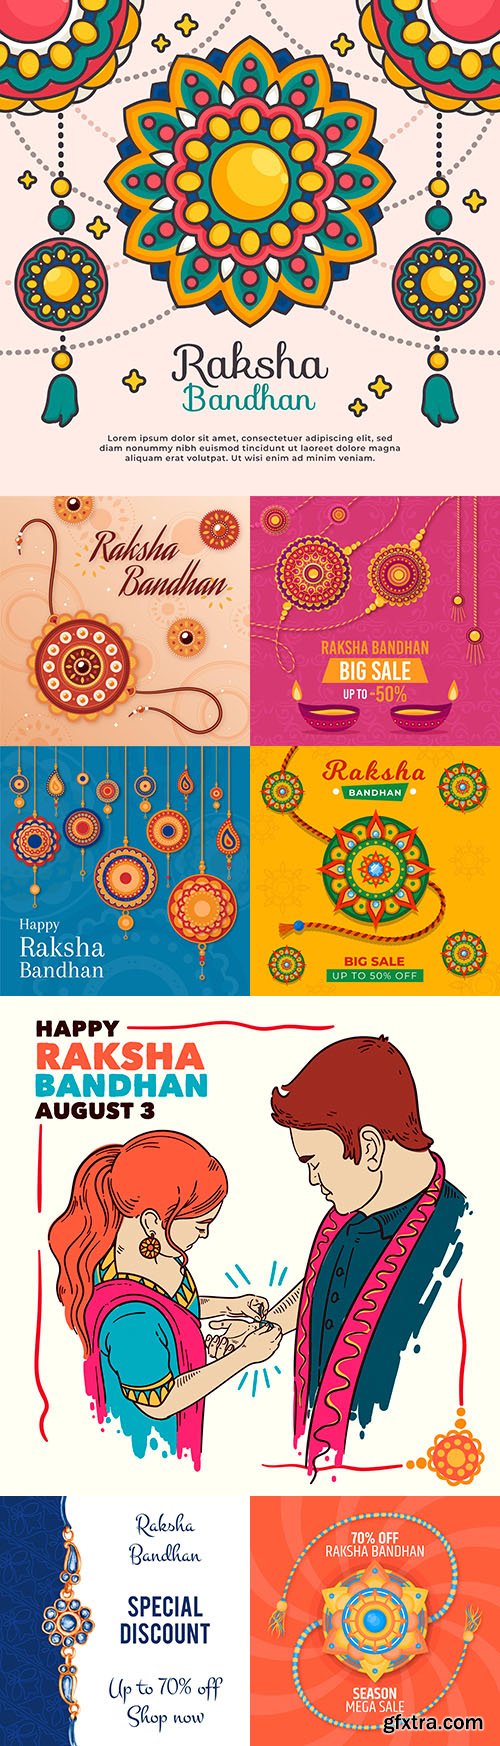 Raksha Bandhan Indian Holiday Flat Design Illustration
